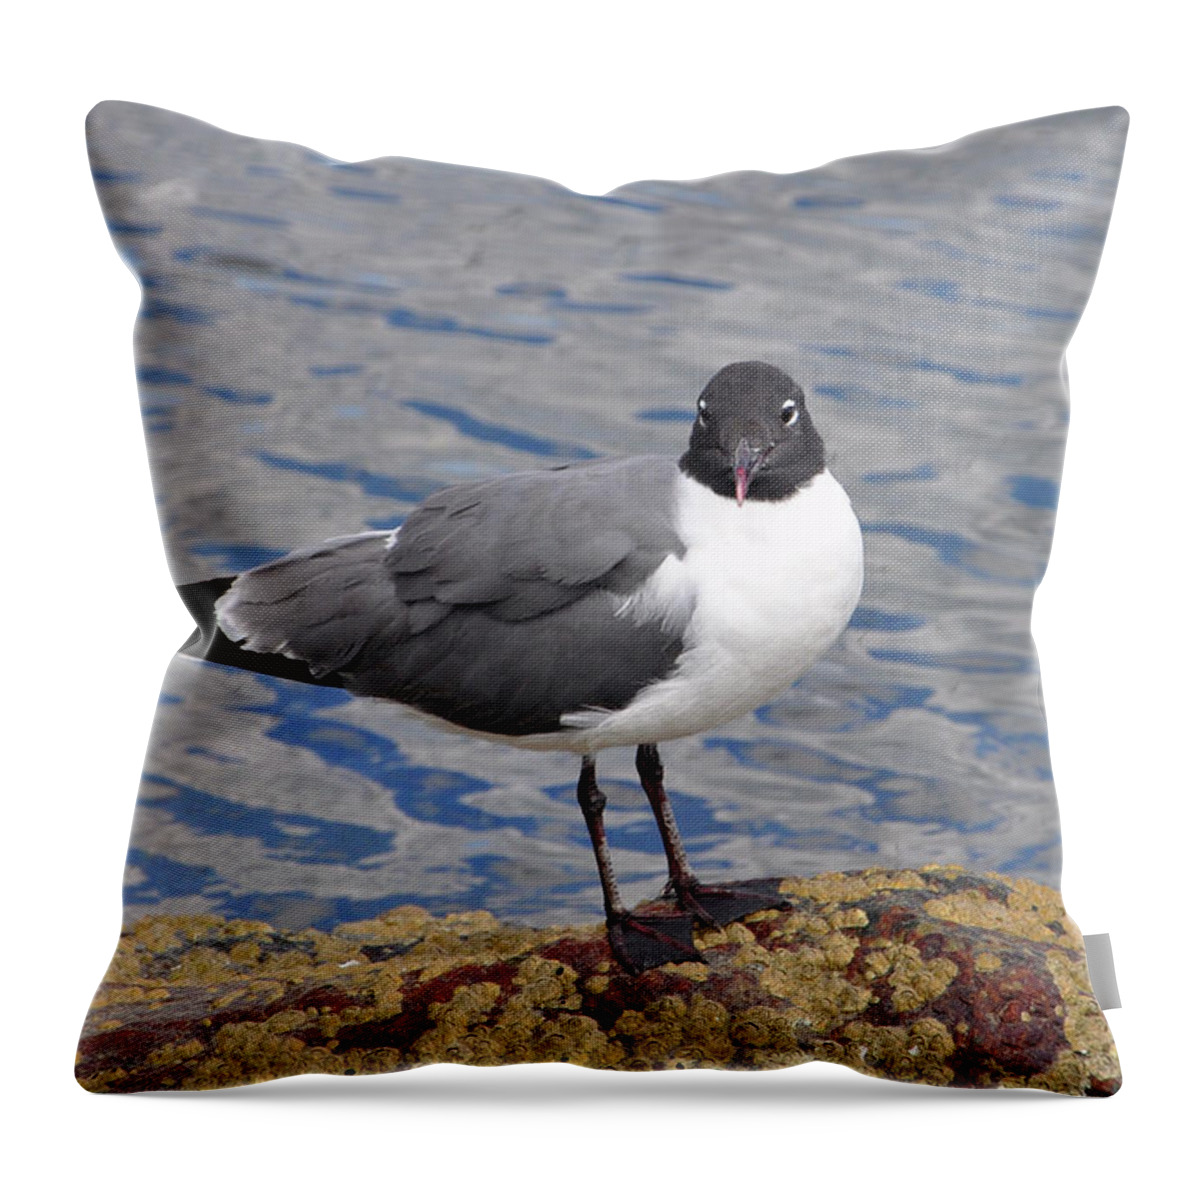 Bird Throw Pillow featuring the photograph Bird by Glenn Gordon